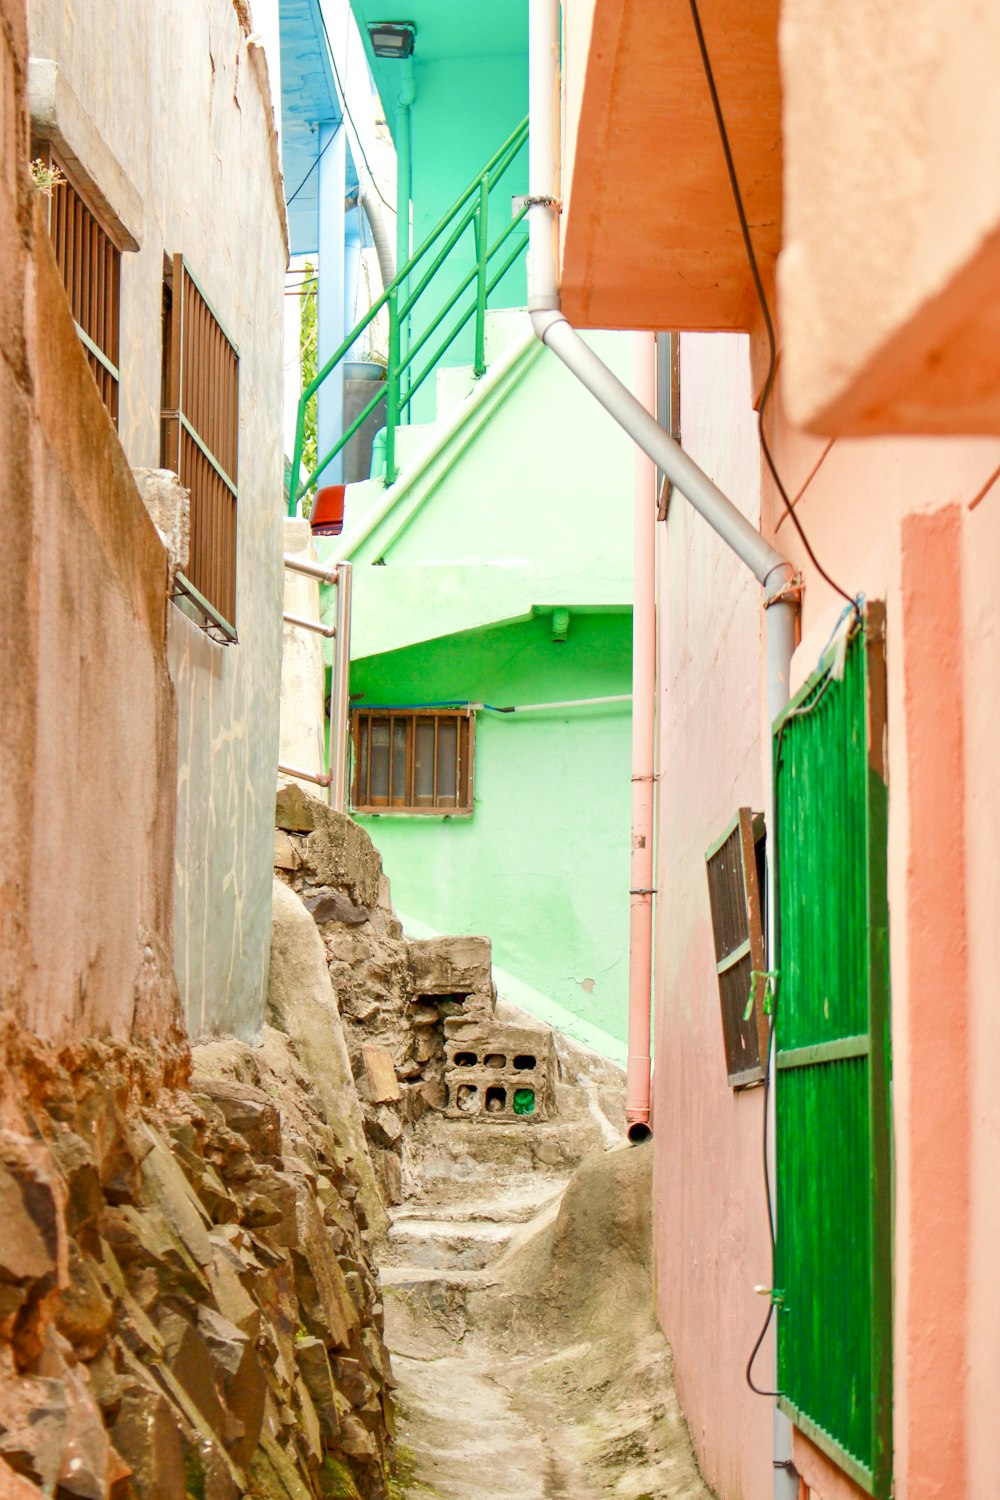 a narrow alley way with a green door